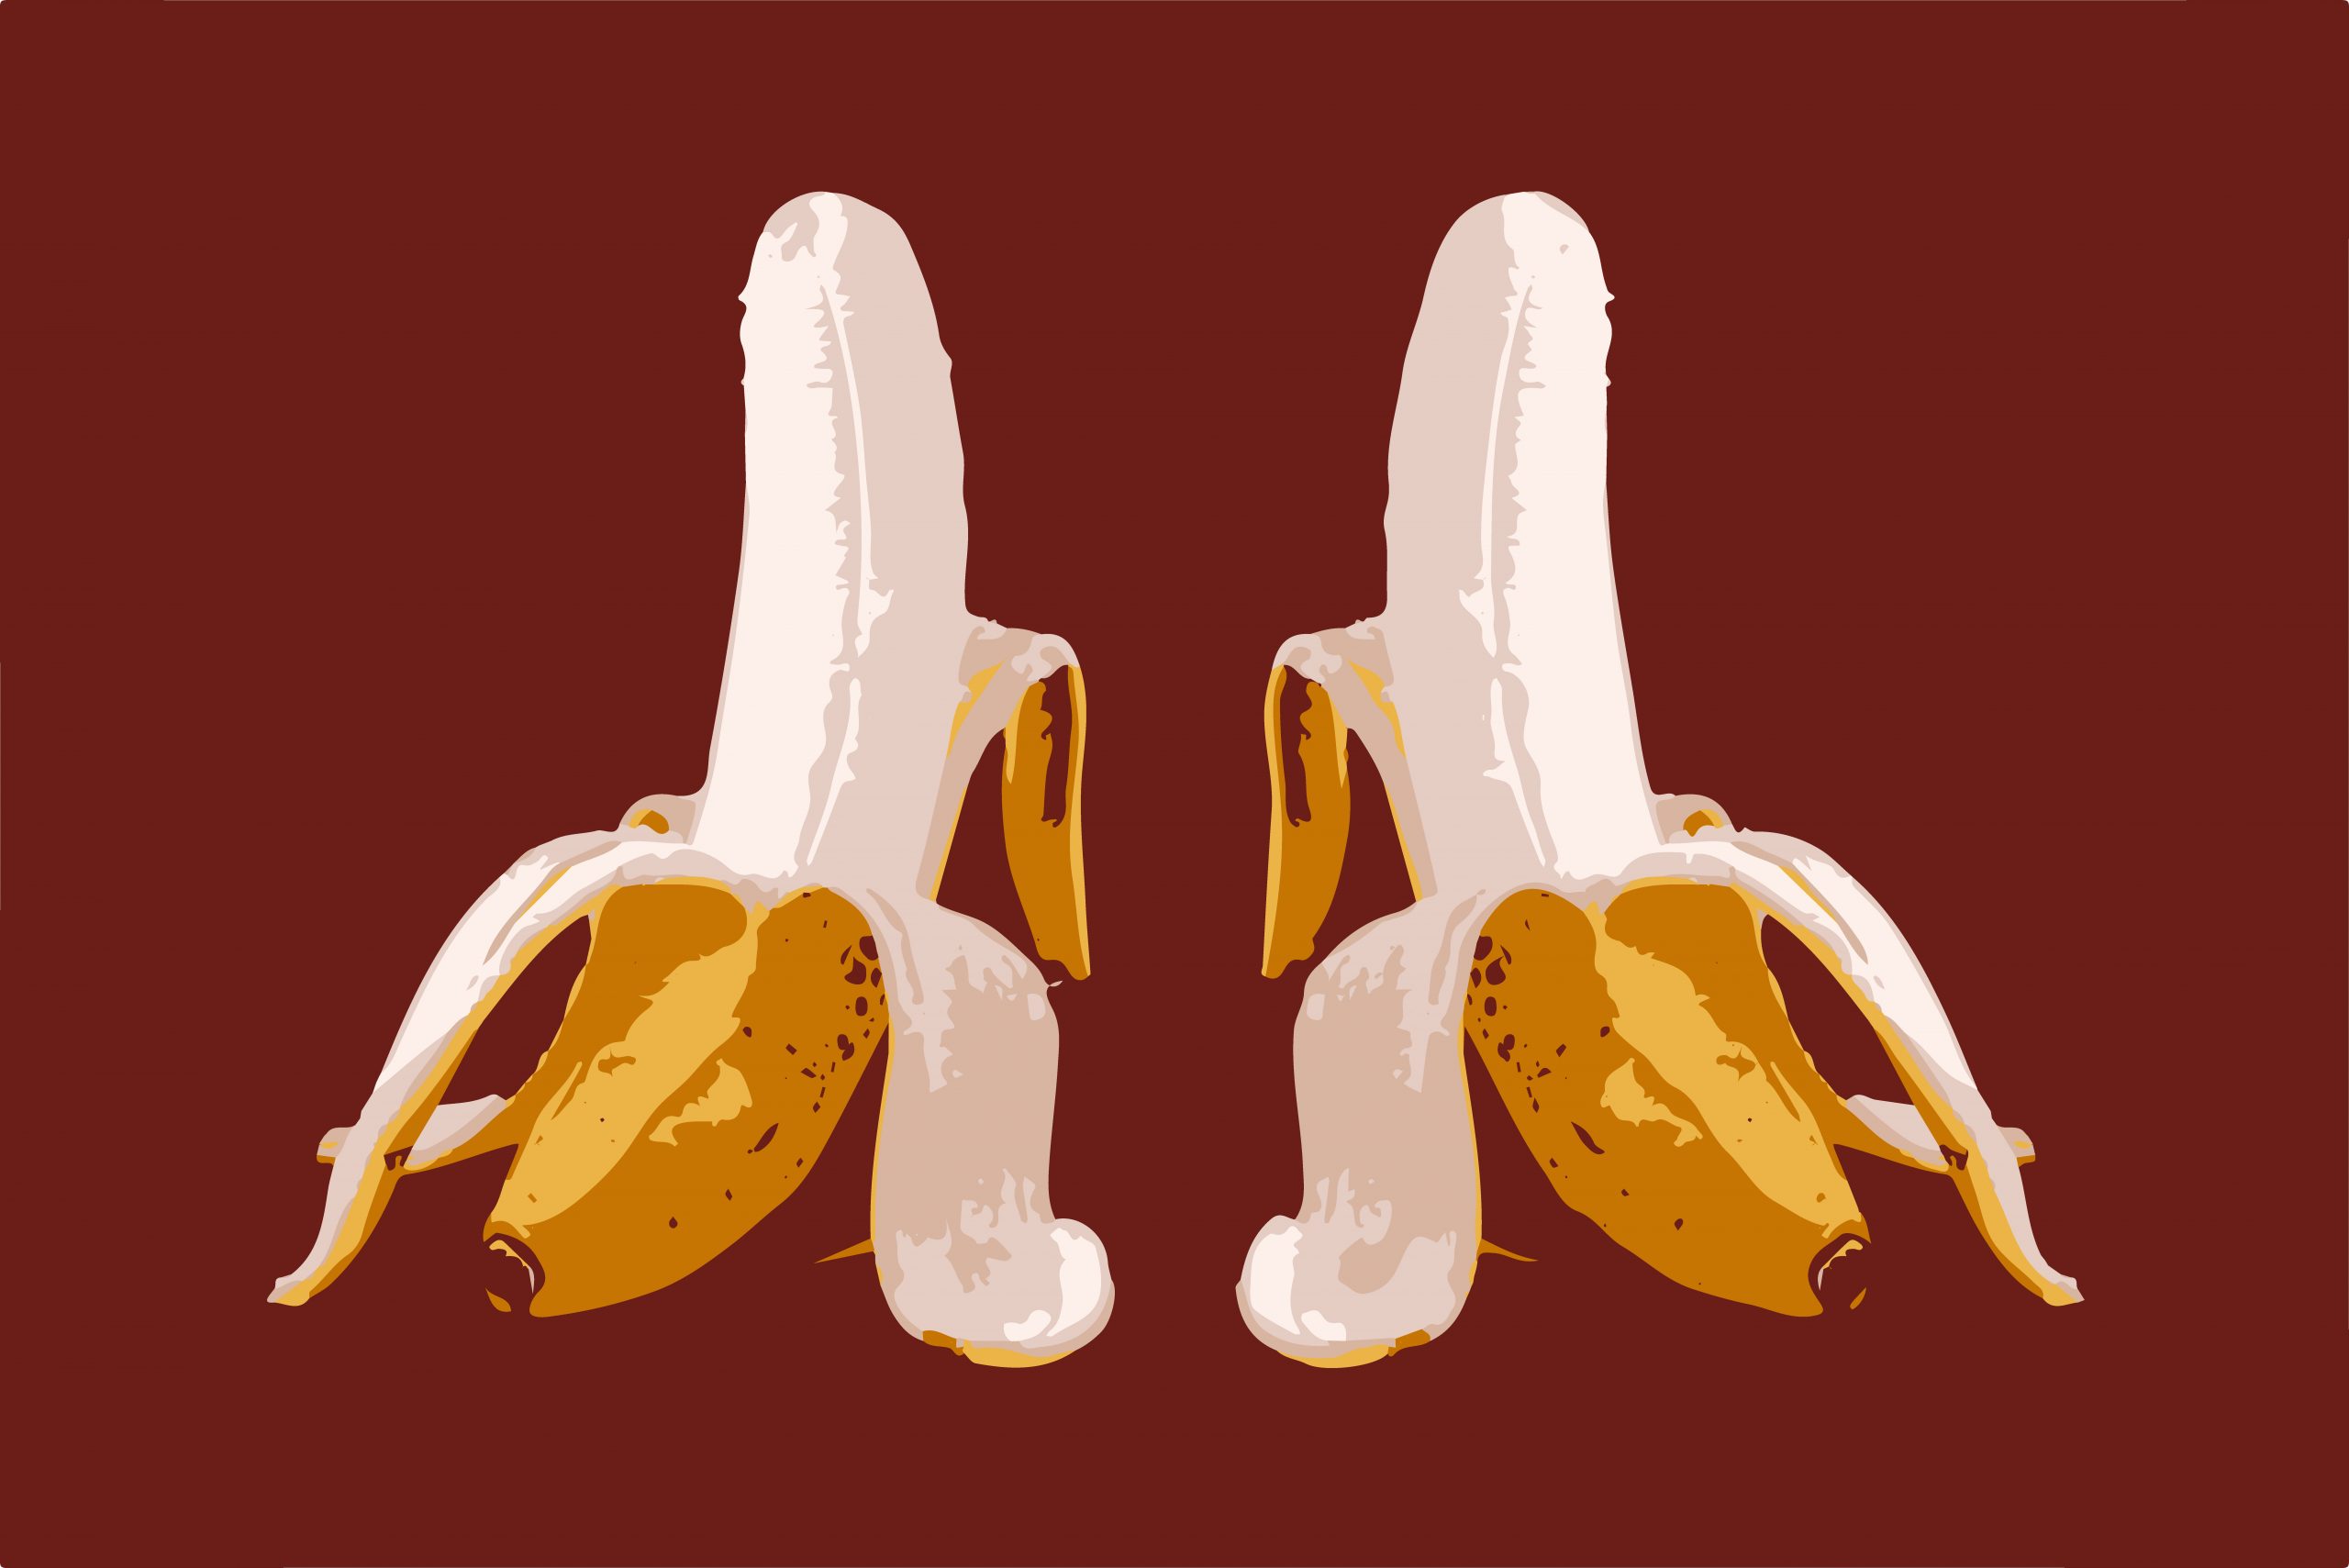 Illustration of peeled bananas